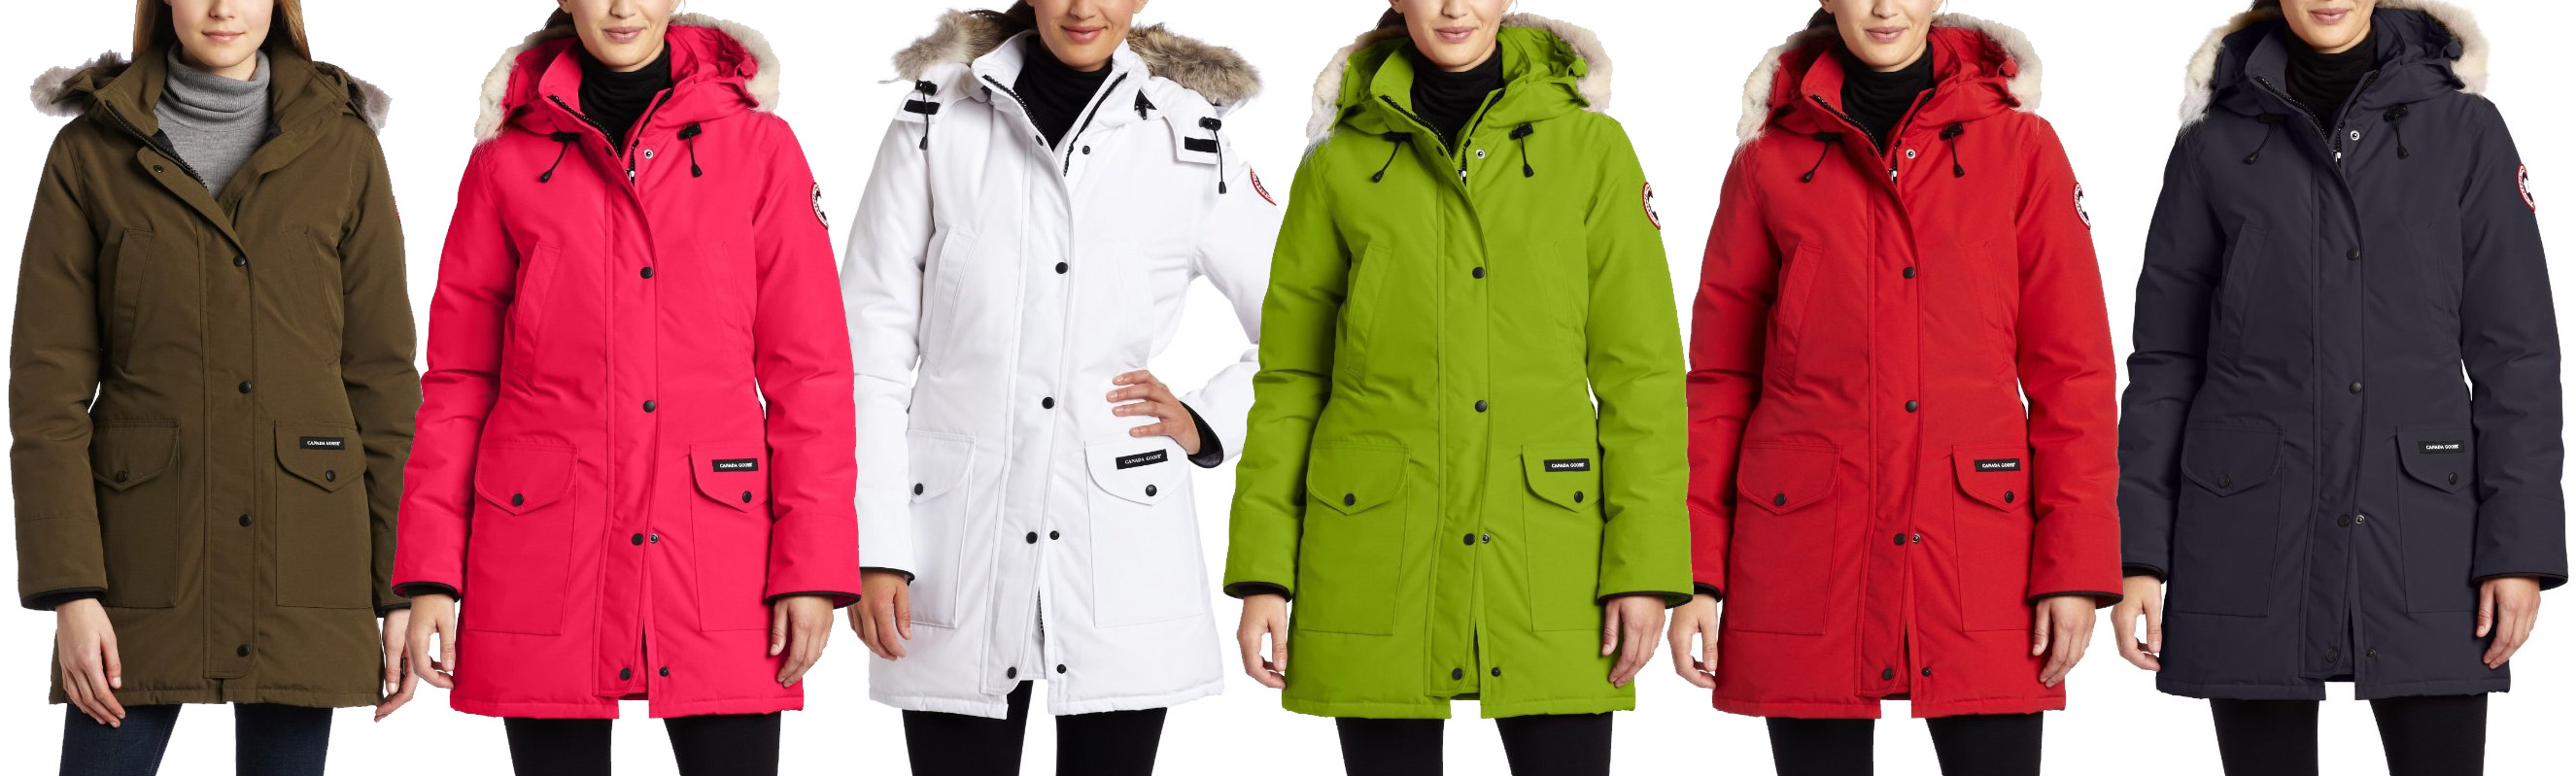 Canada Goose toronto replica discounts - Canada Goose Trillium Parka best winter Parka? - My Fashion Wants